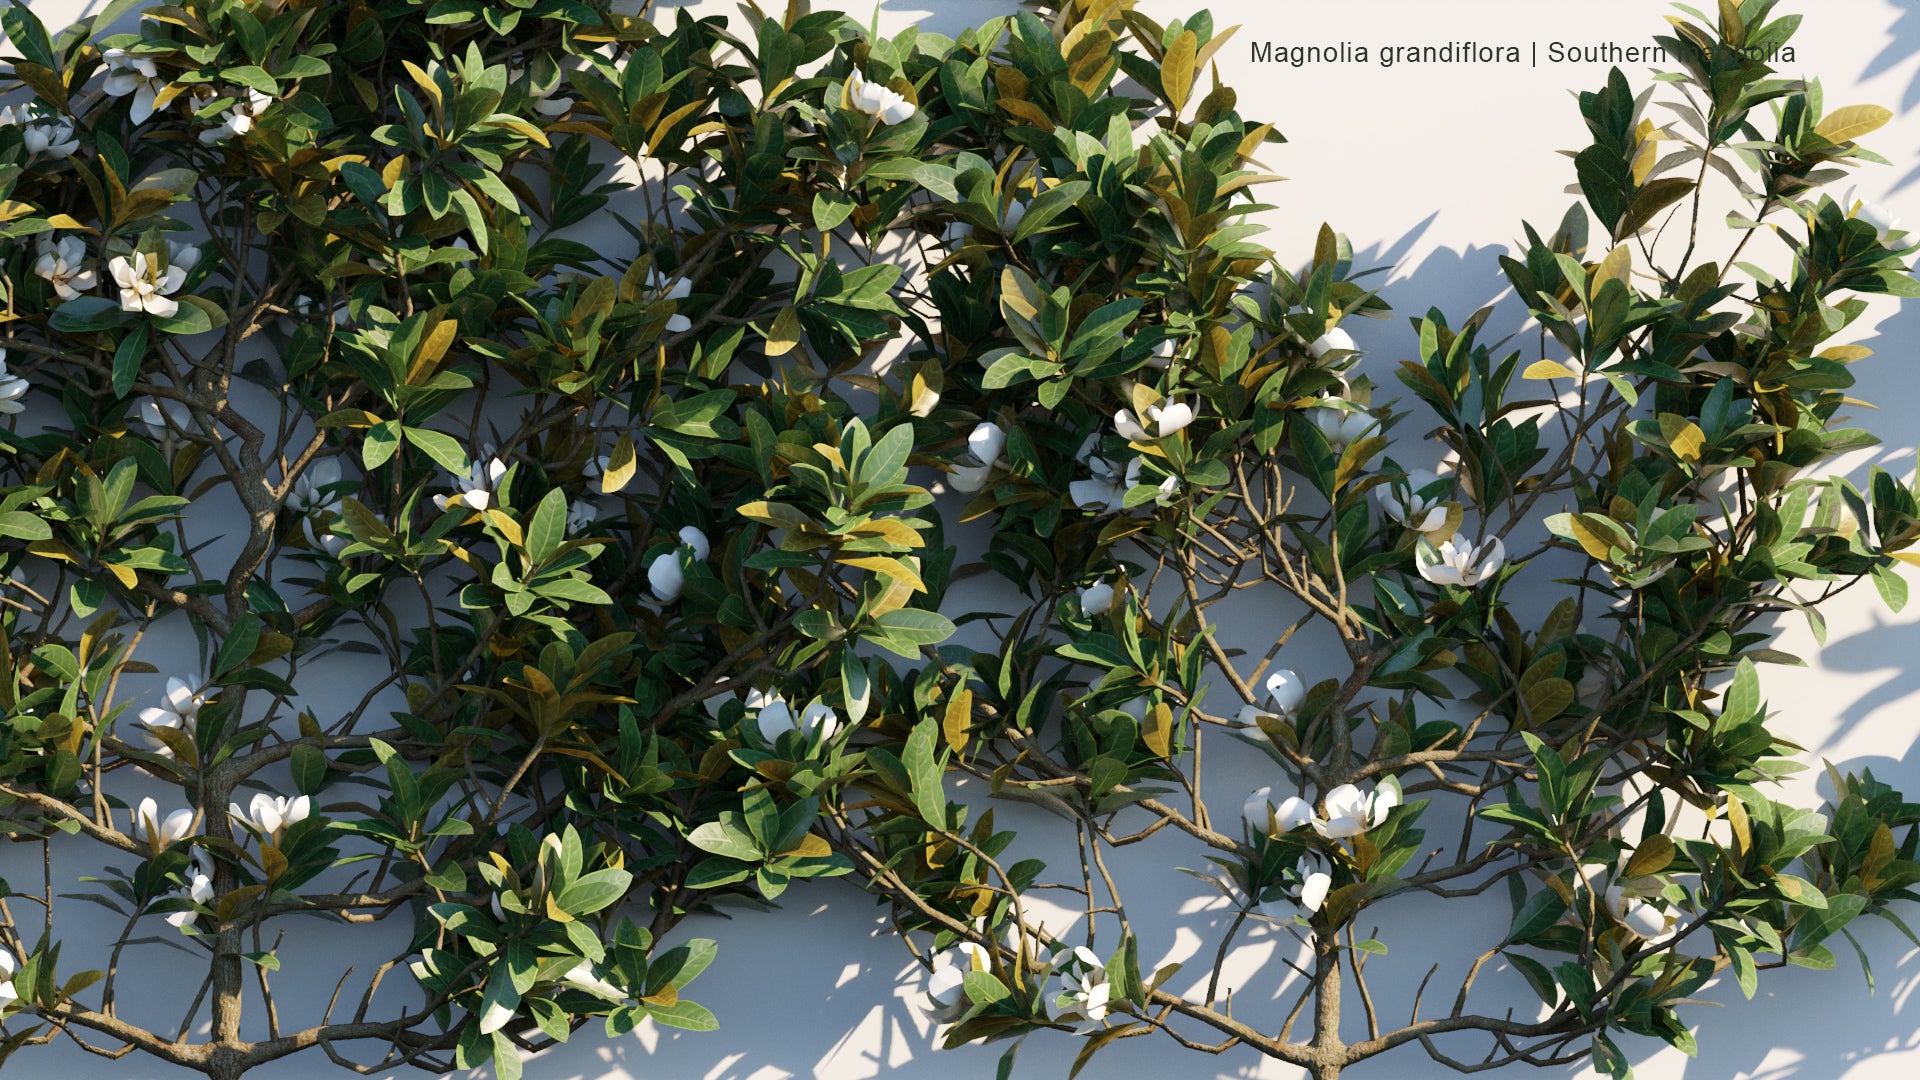 Low Poly Magnolia Grandiflora - Southern Magnolia, Bull Bay (3D Model)